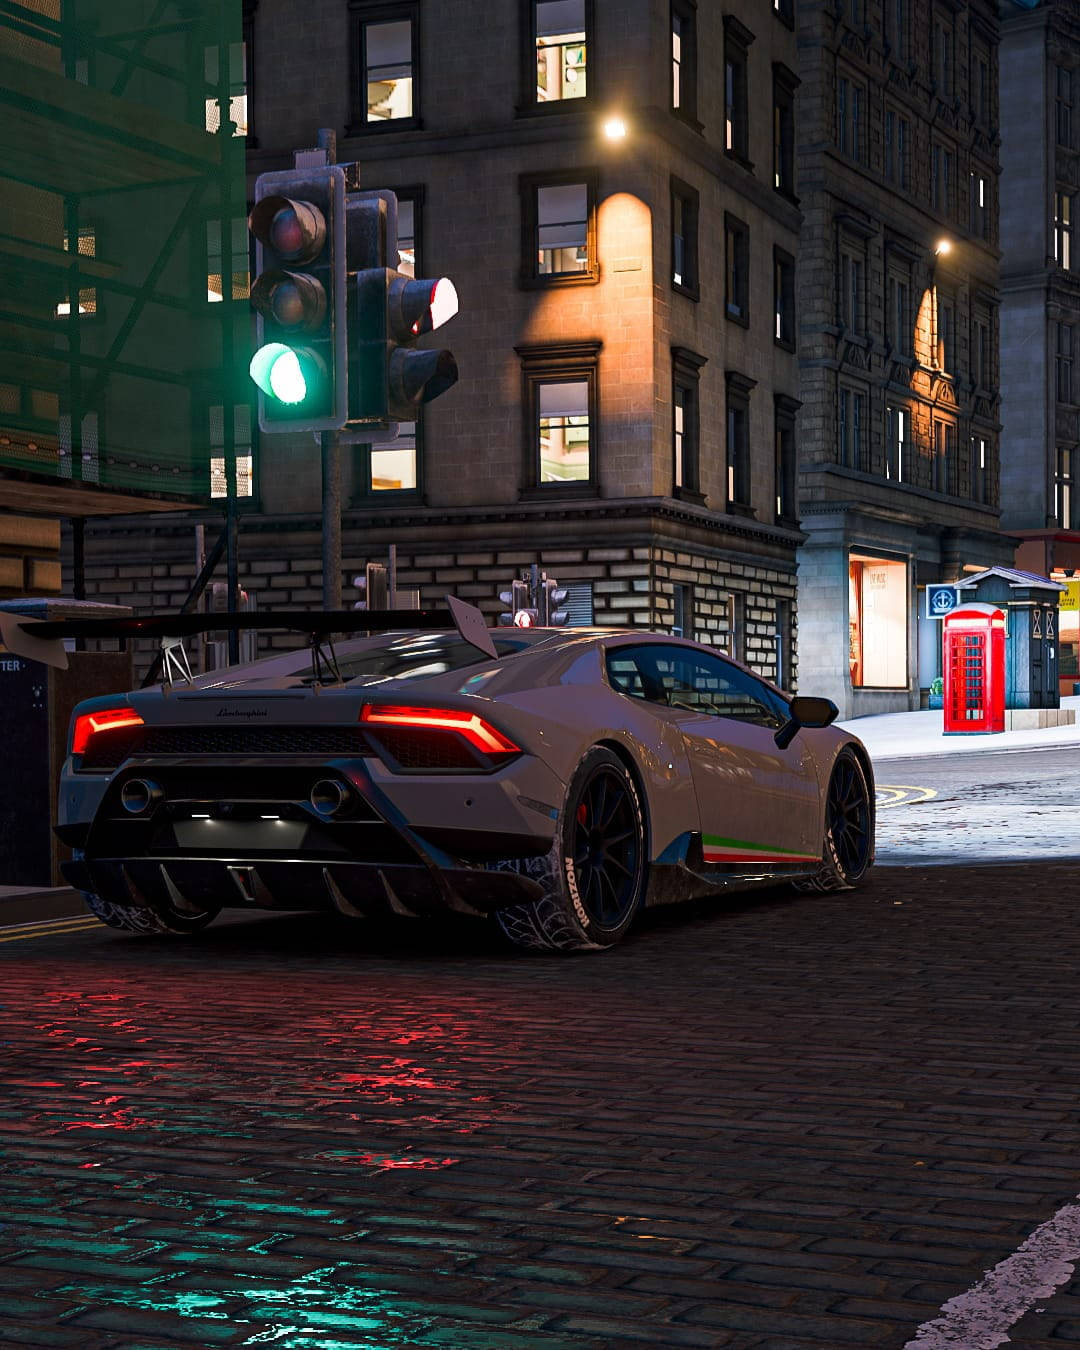 Caption: An Exhilarating Ride With Forza Horizon 4 - Lamborghini Huracan Performante